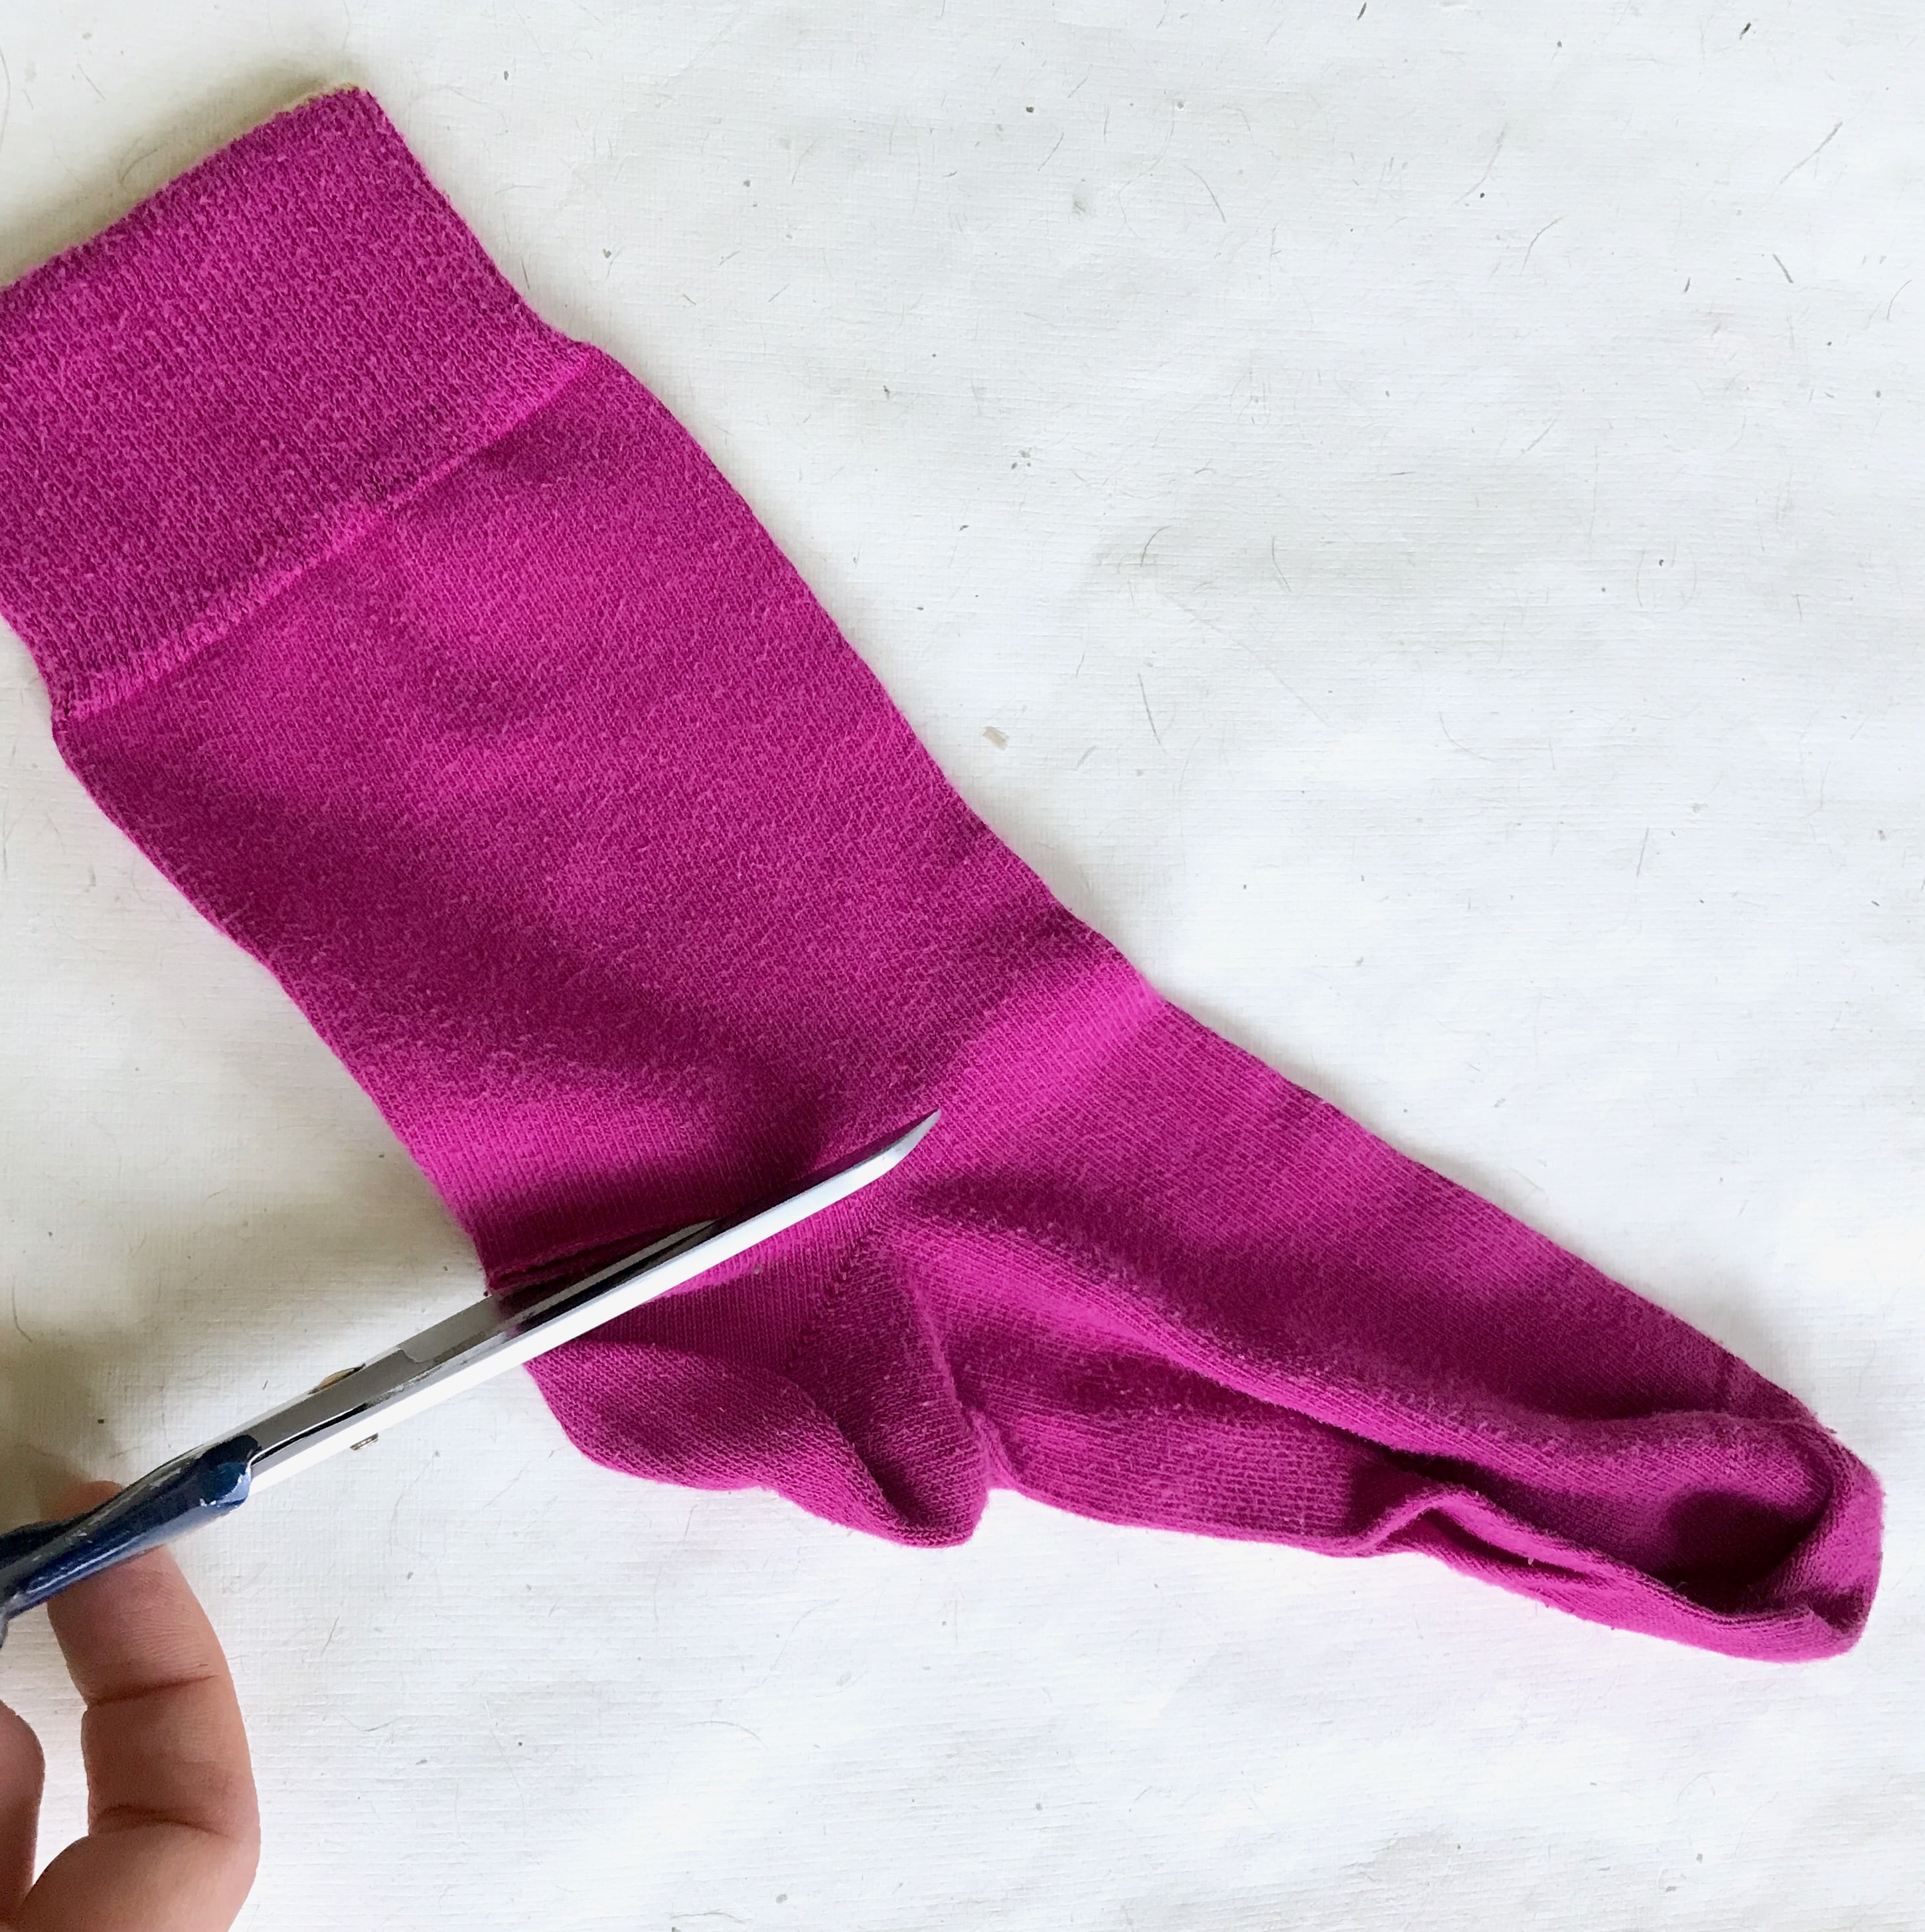 DIY Adventskalener aus Socken selber machen, Upcling